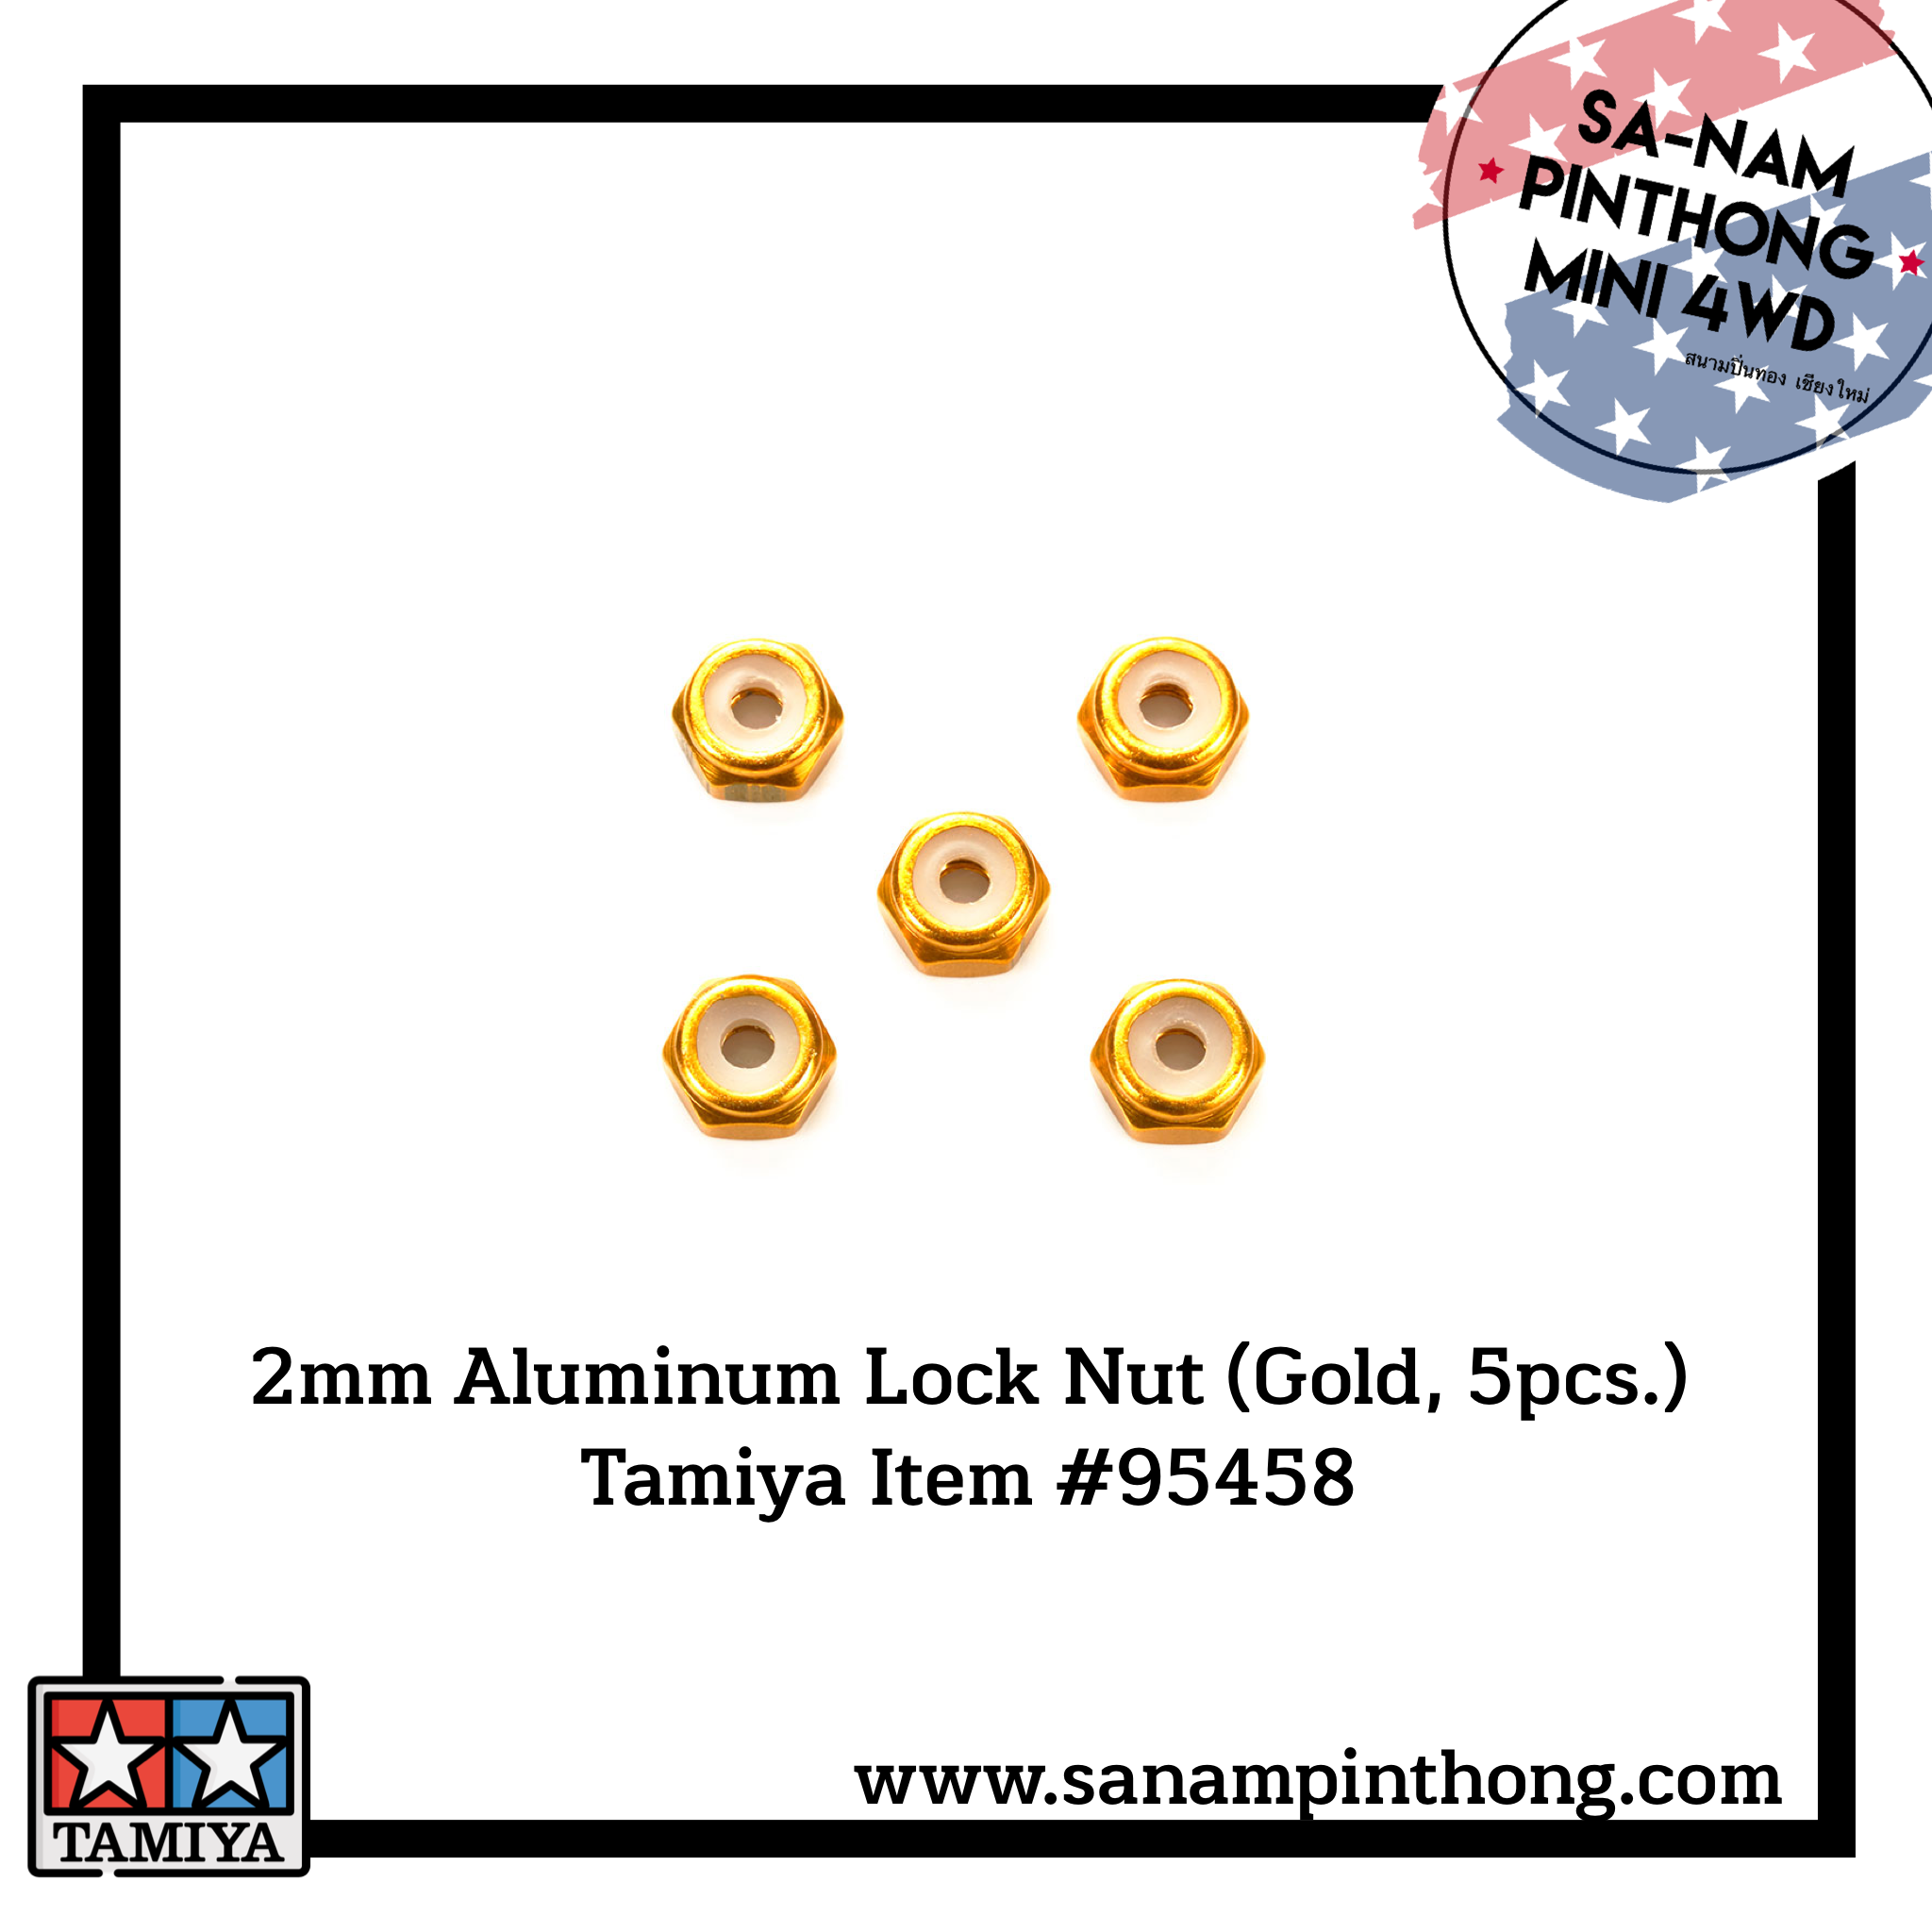 Tamiya Mini 4WD 95458 2mm Aluminium Locknut 5 pcs. Gold